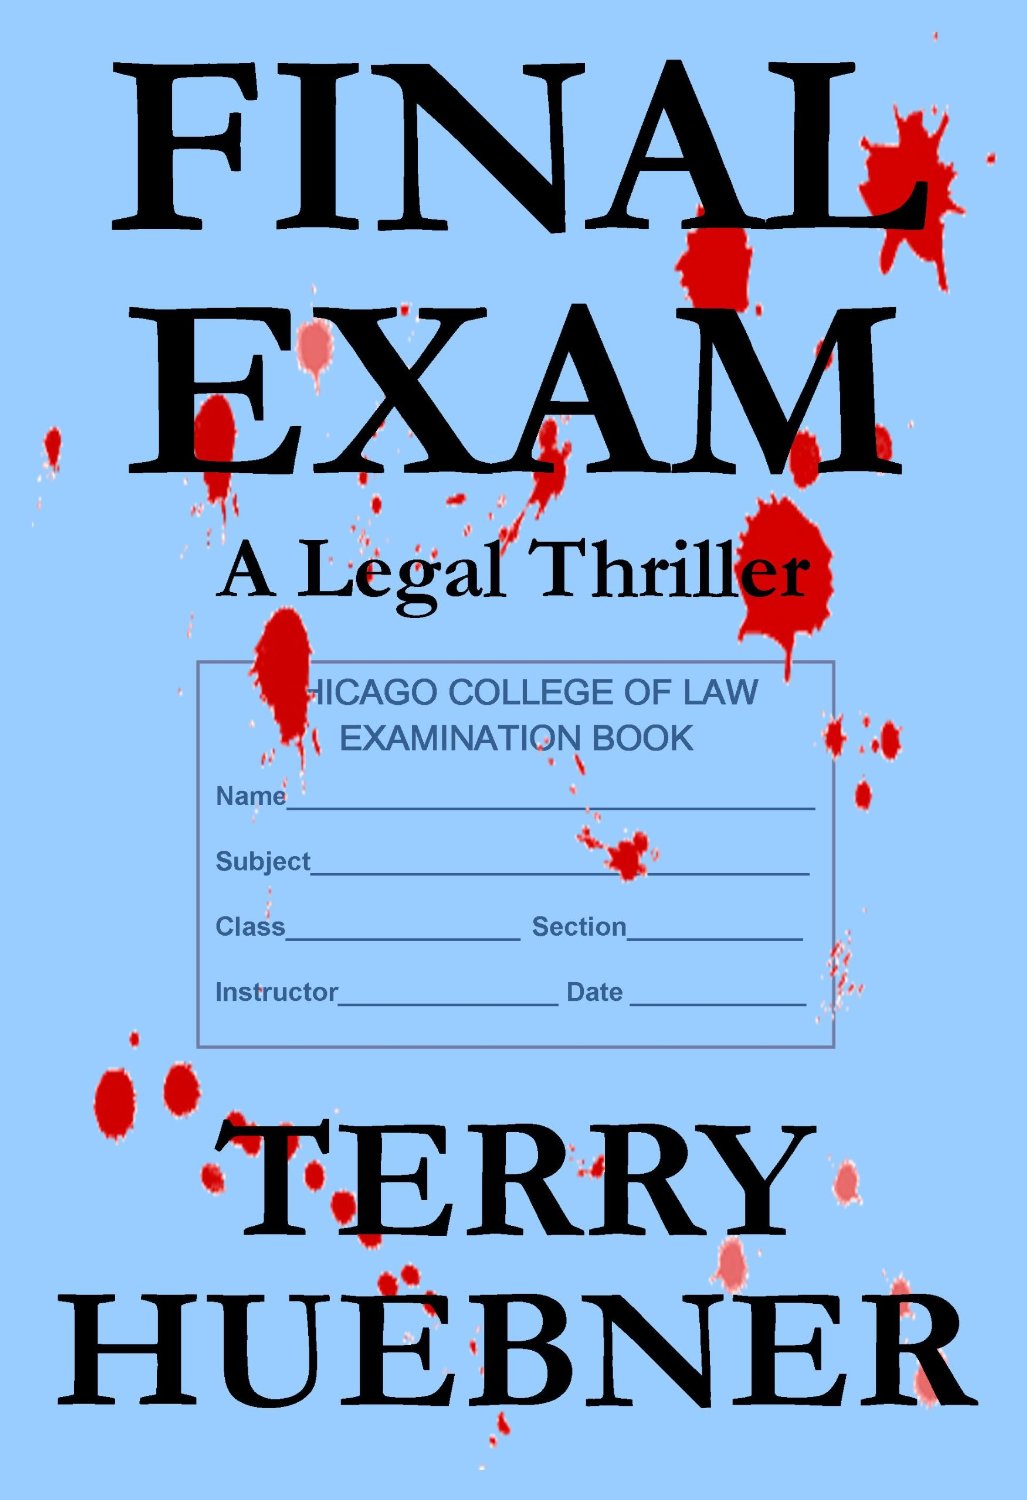 Final Exam: A Legal Thriller (The Final Series Book 1) by Terry Huebner